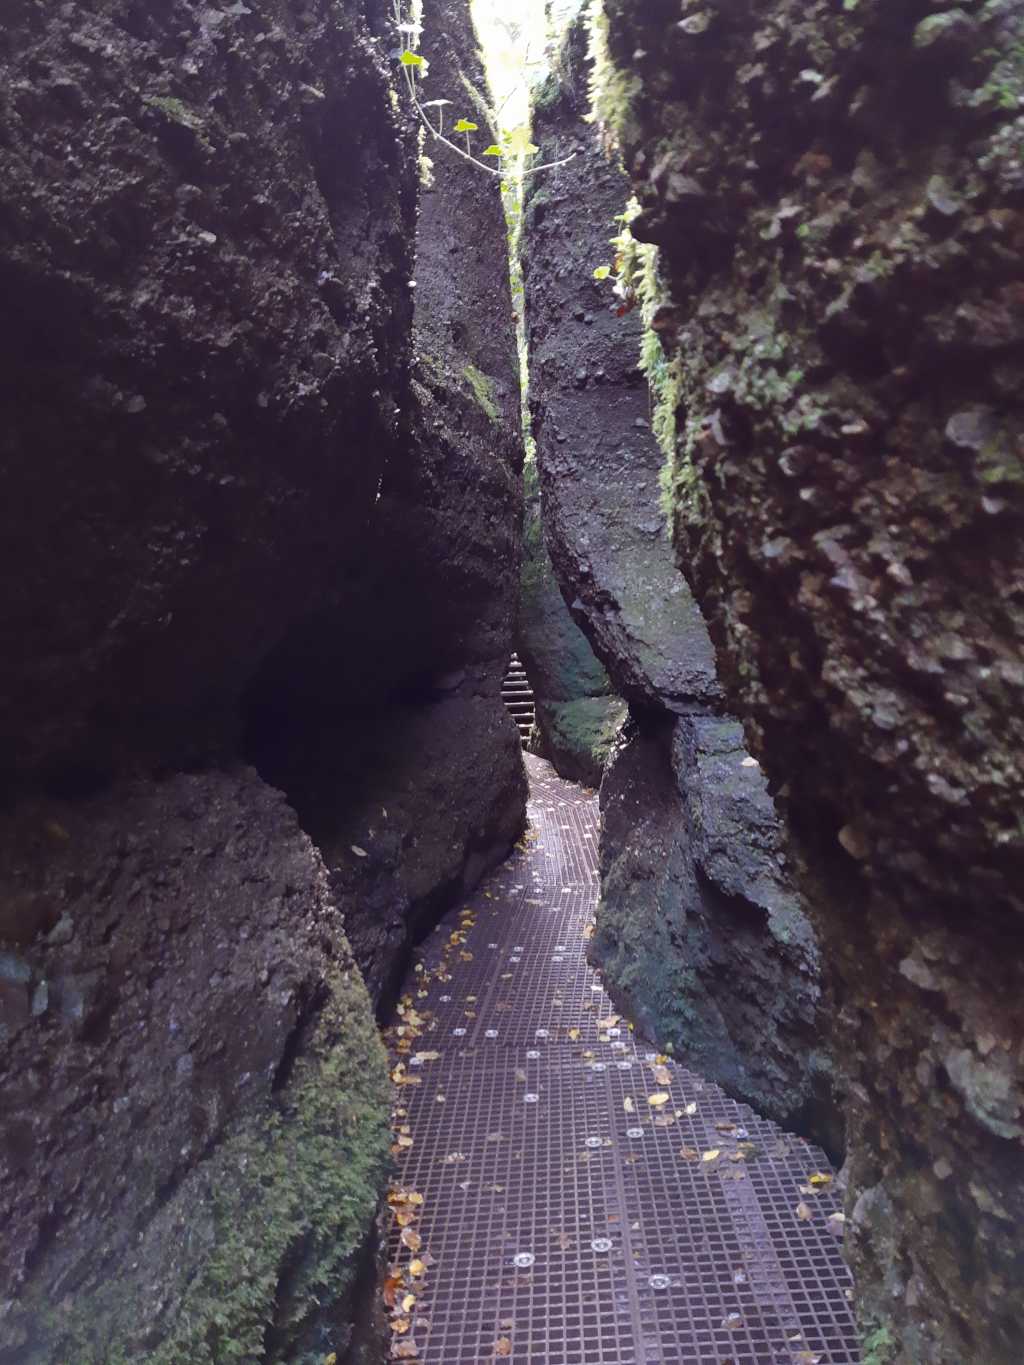 thueringen dragon gorge narrow point